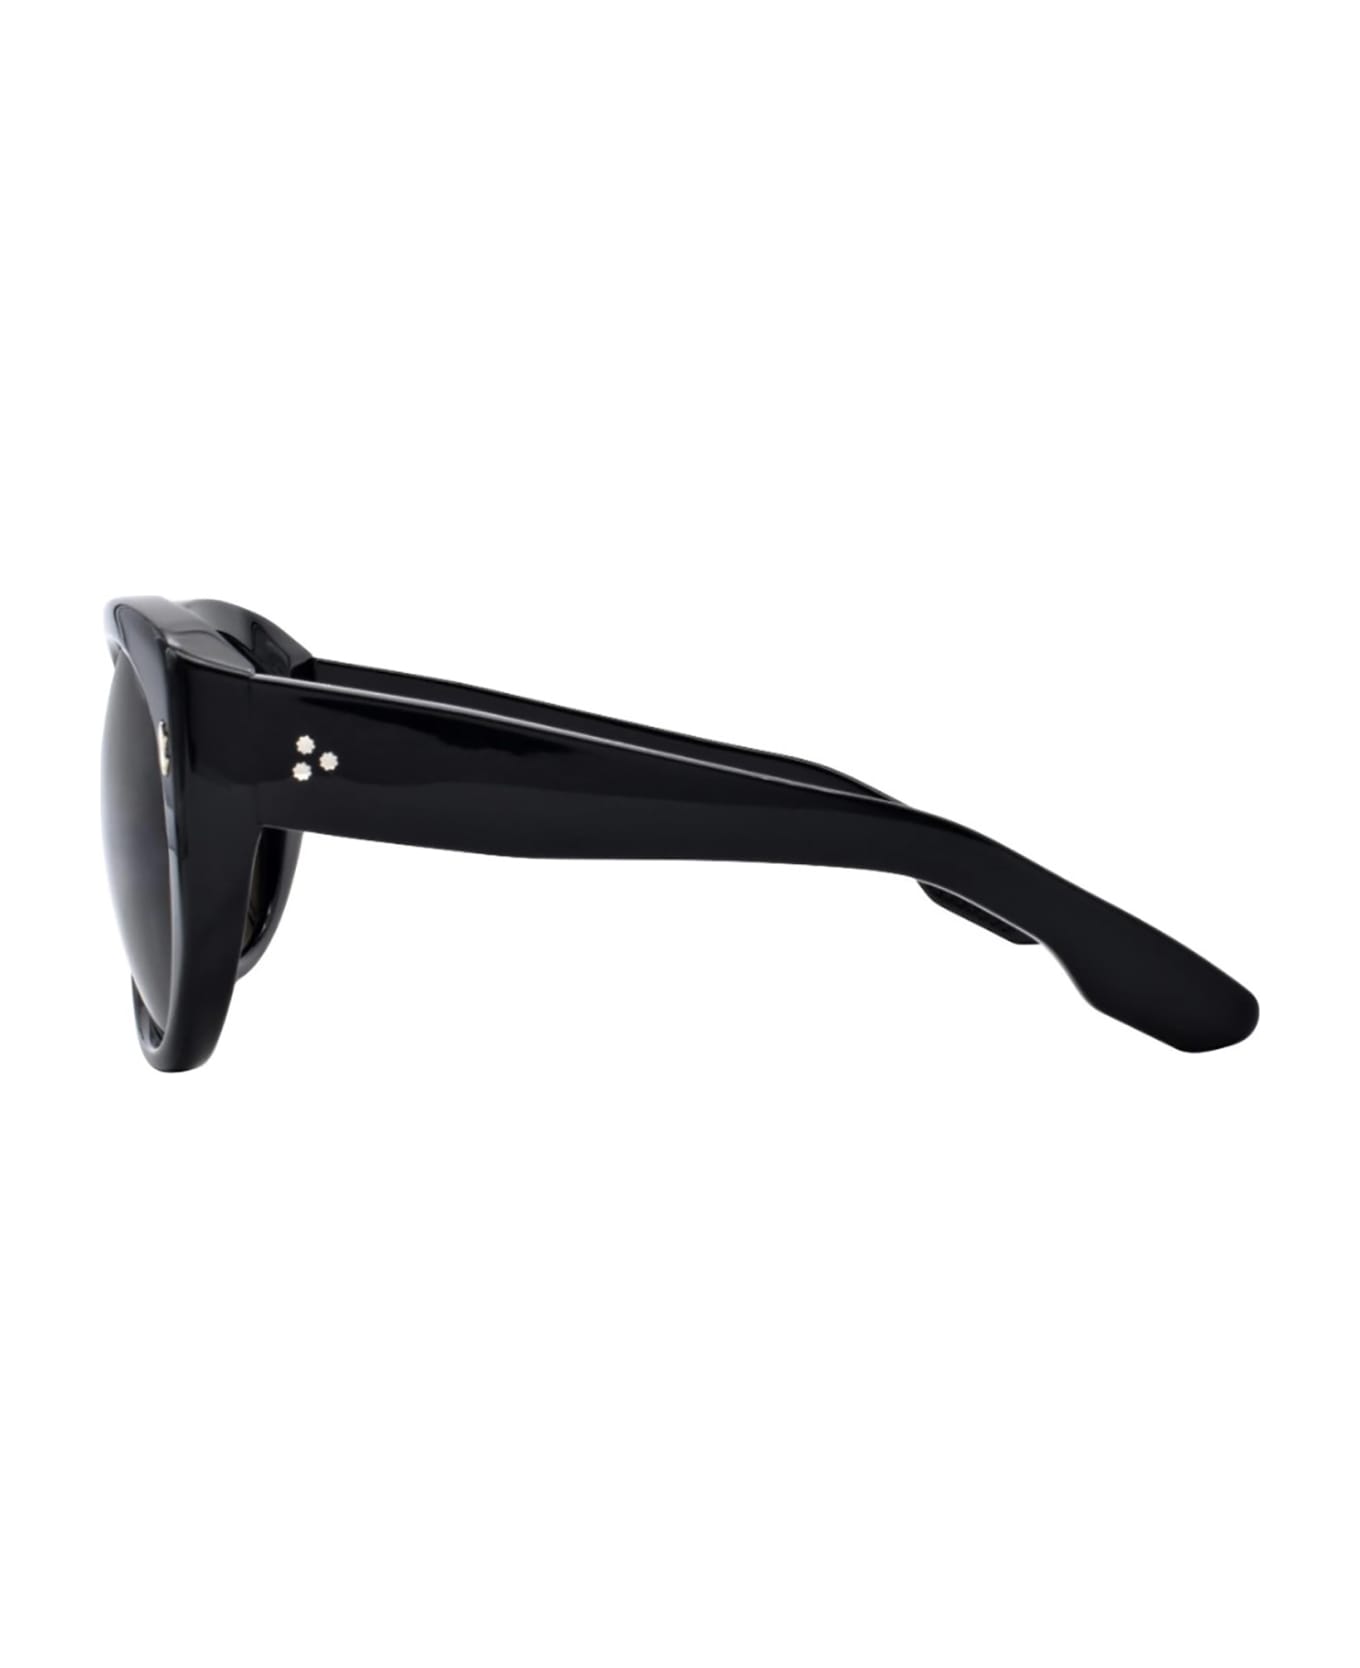 Jacques Marie Mage ROXY Sunglasses - Black